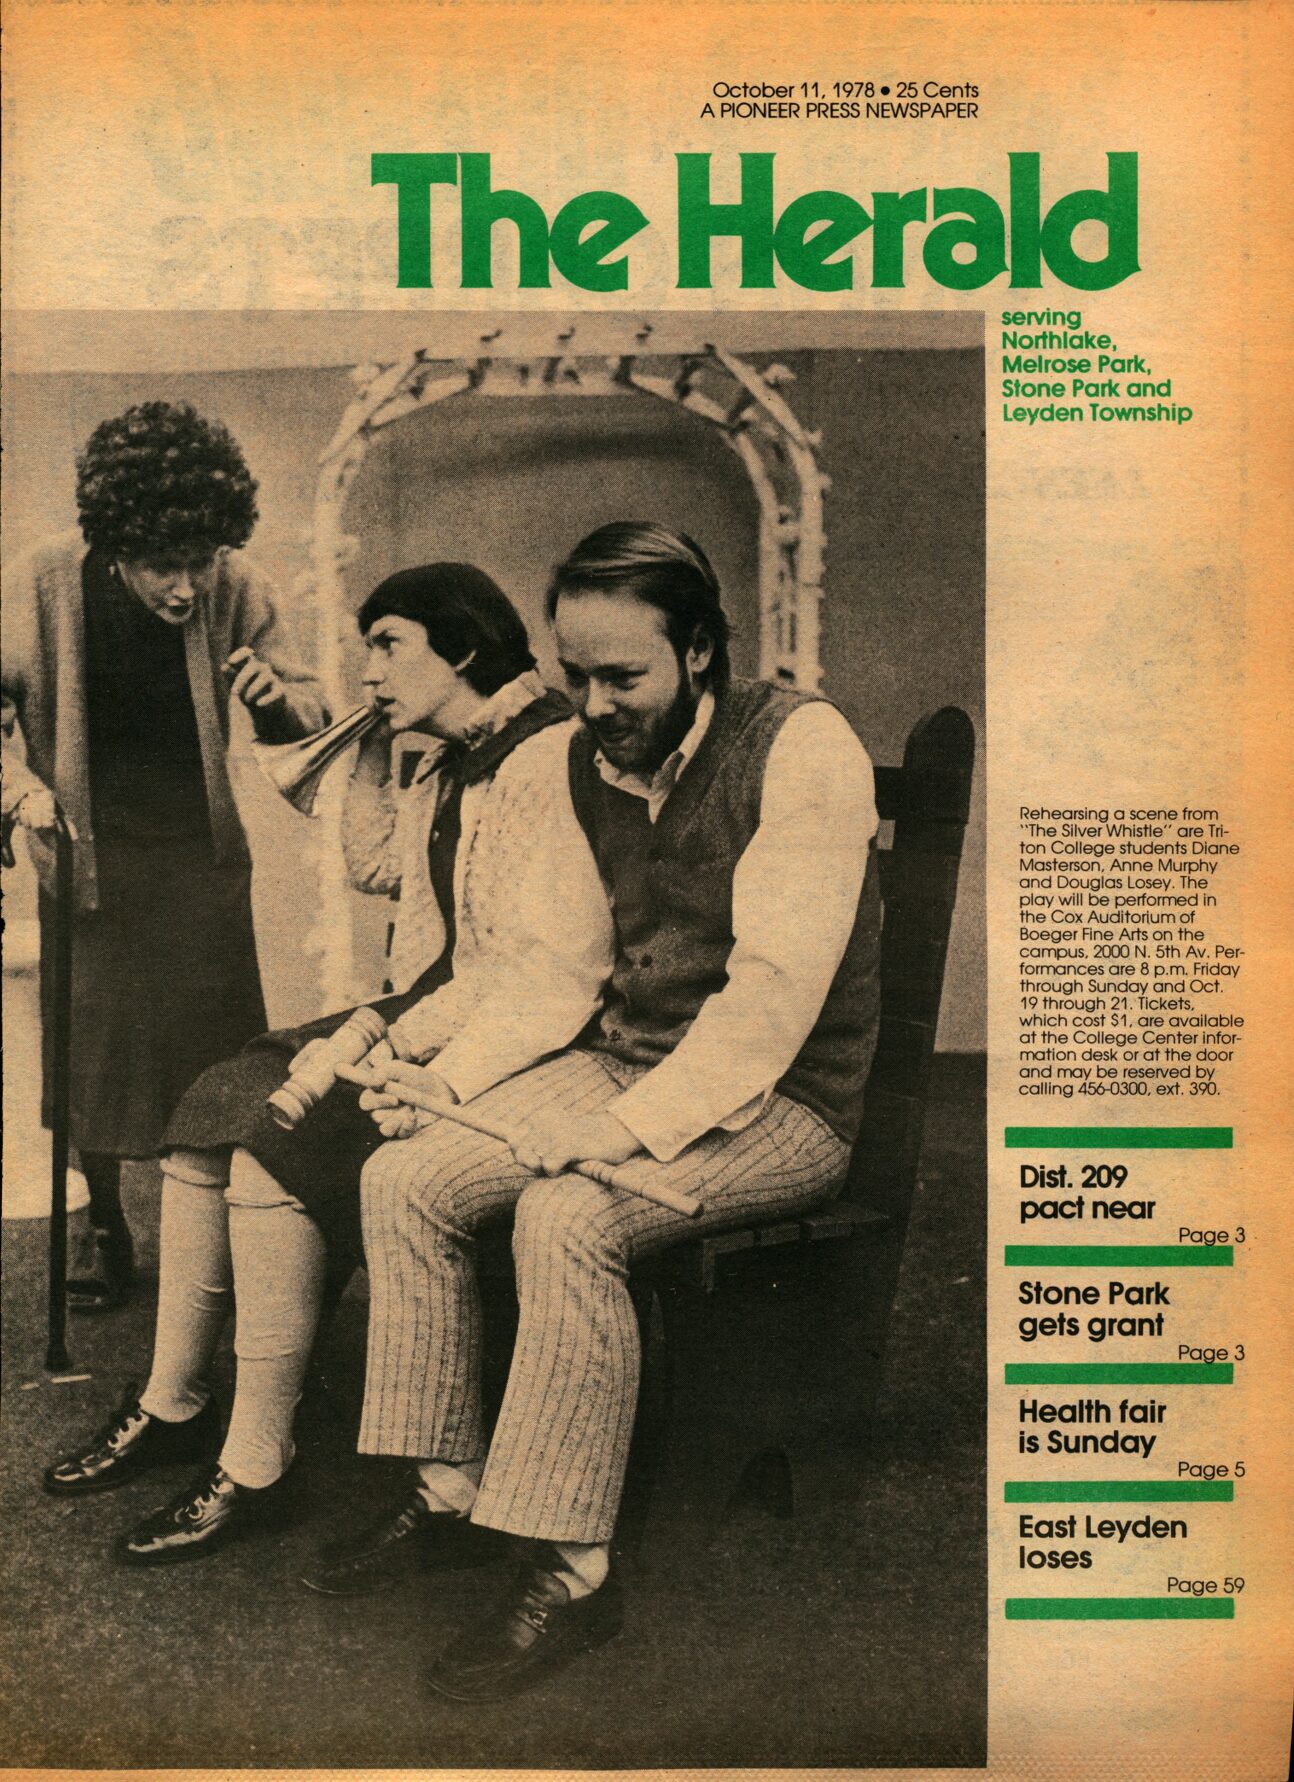 The Herald – 19781011